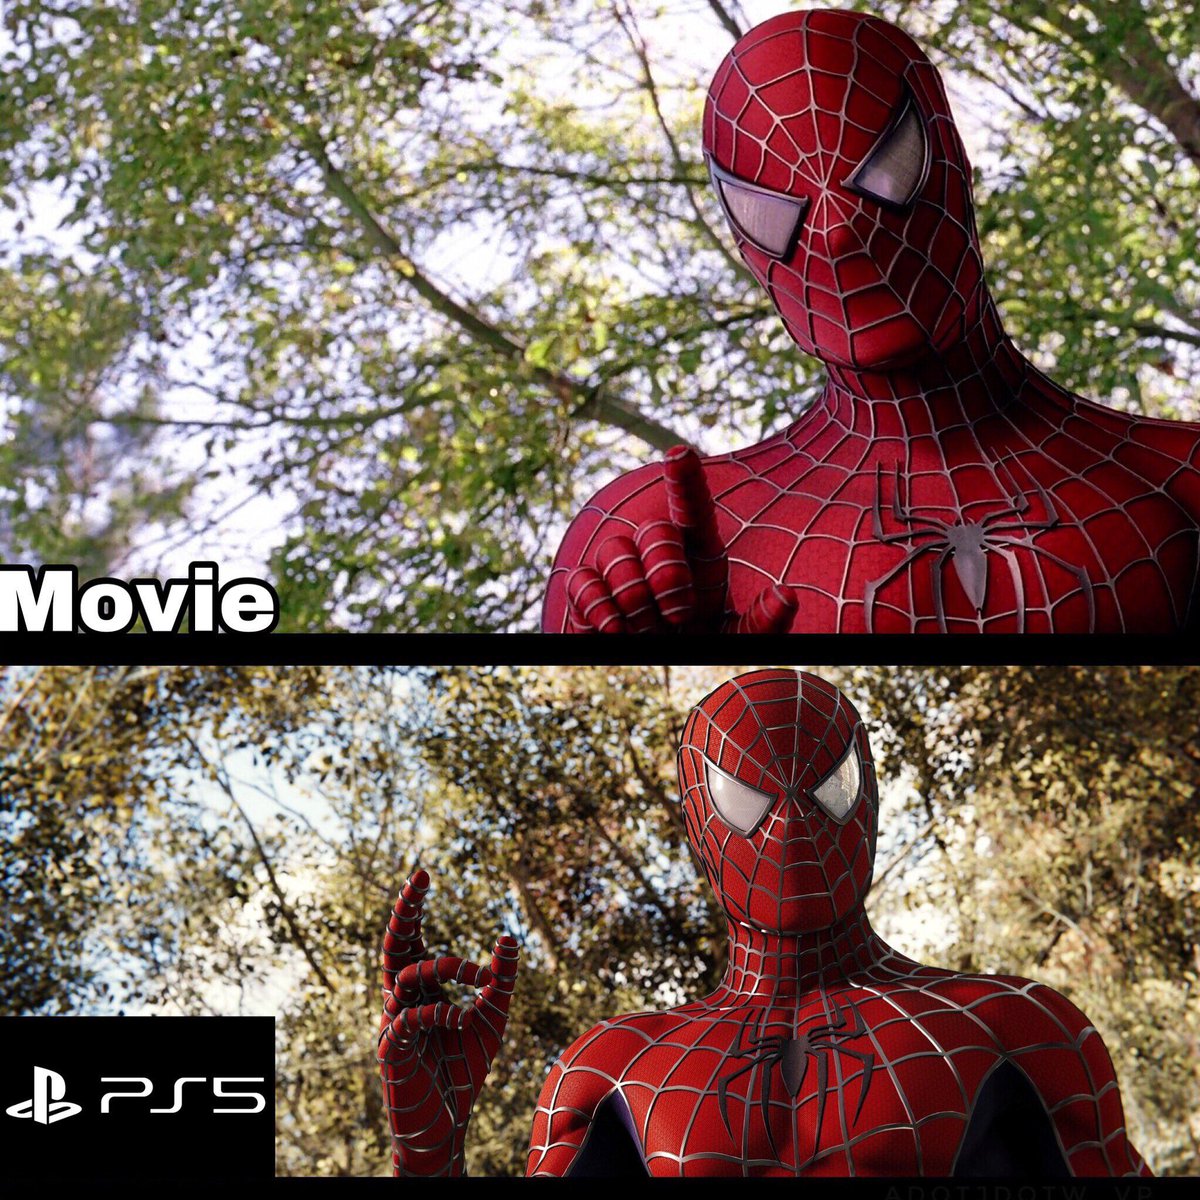 RT @VGHumour: Spider-Man 2 Movie Scene Vs Spiderman PS5. https://t.co/xlBjtCxLGG